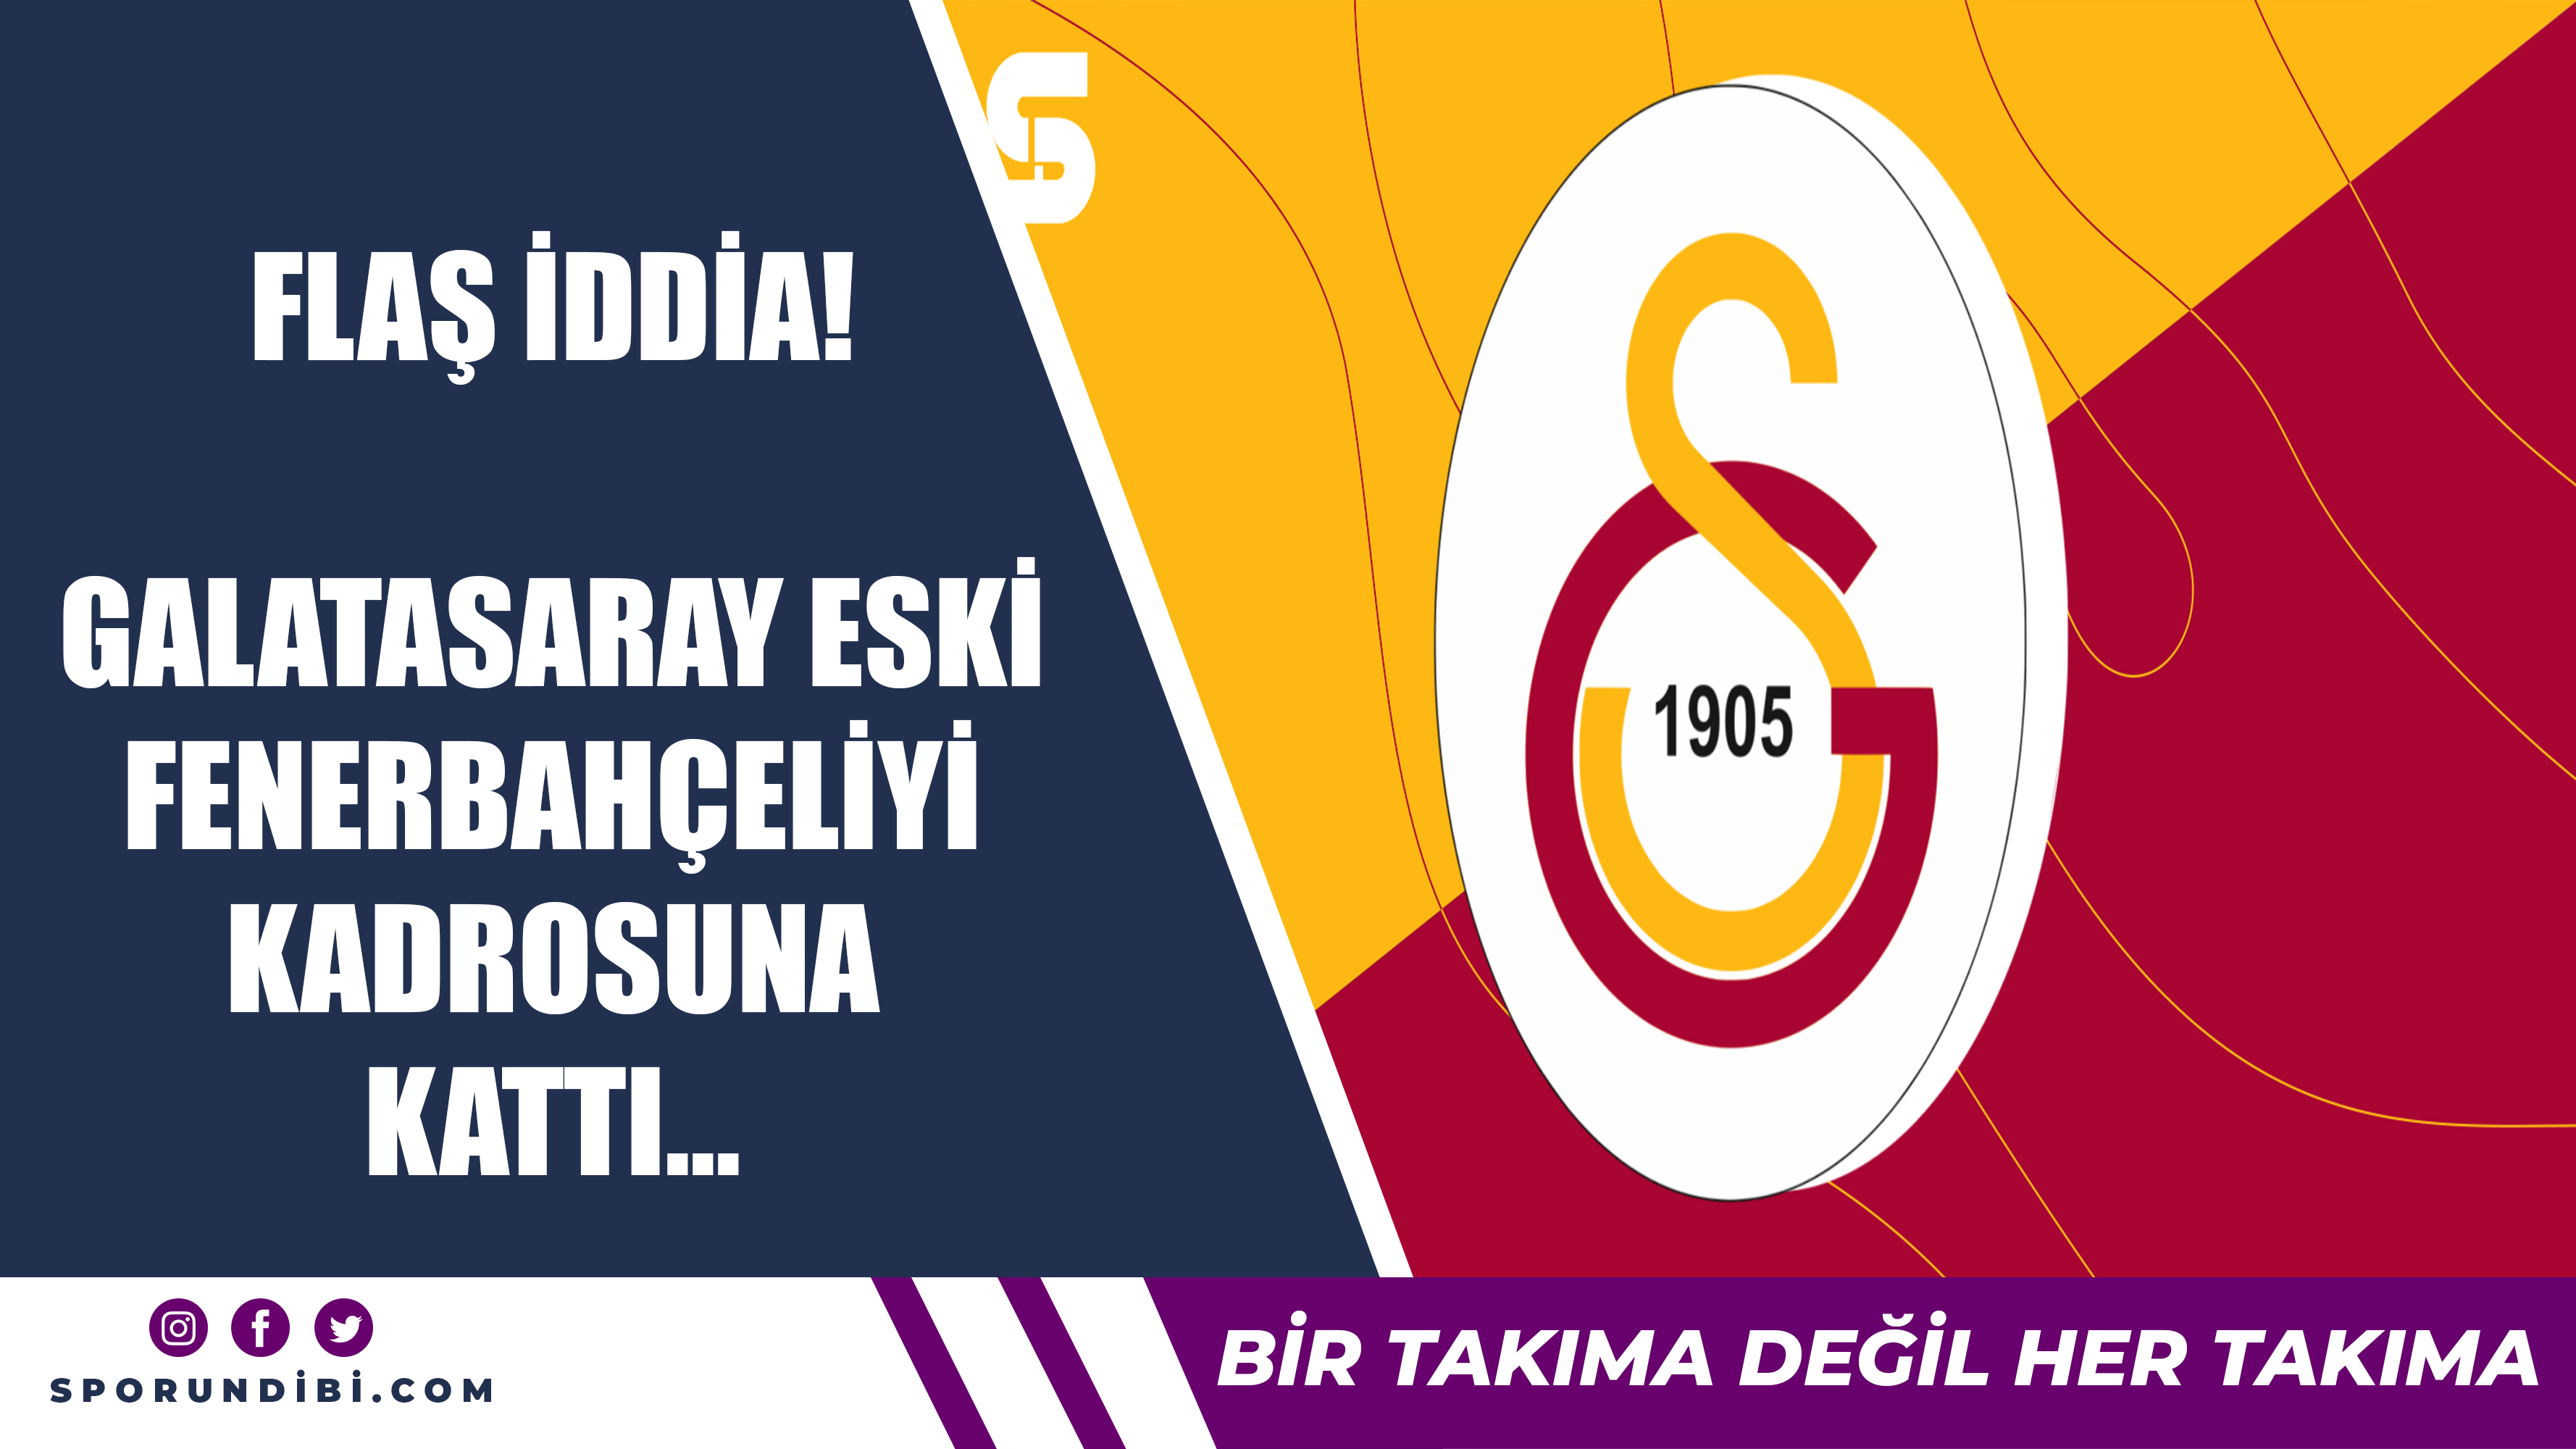 Flaş iddia! Galatasaray eski Fenerbahçeliyi kadrosuna kattı...